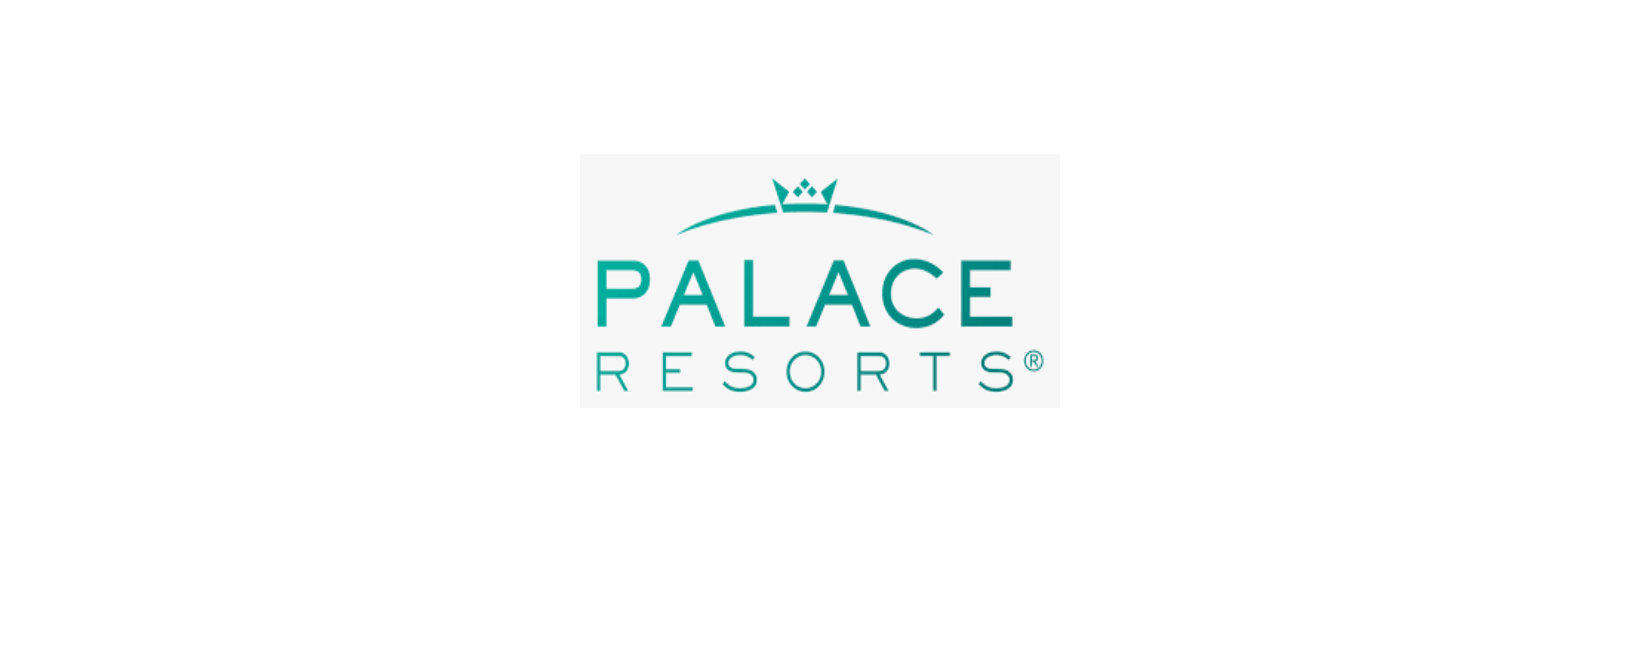 Palace Resorts Discount Code 2022